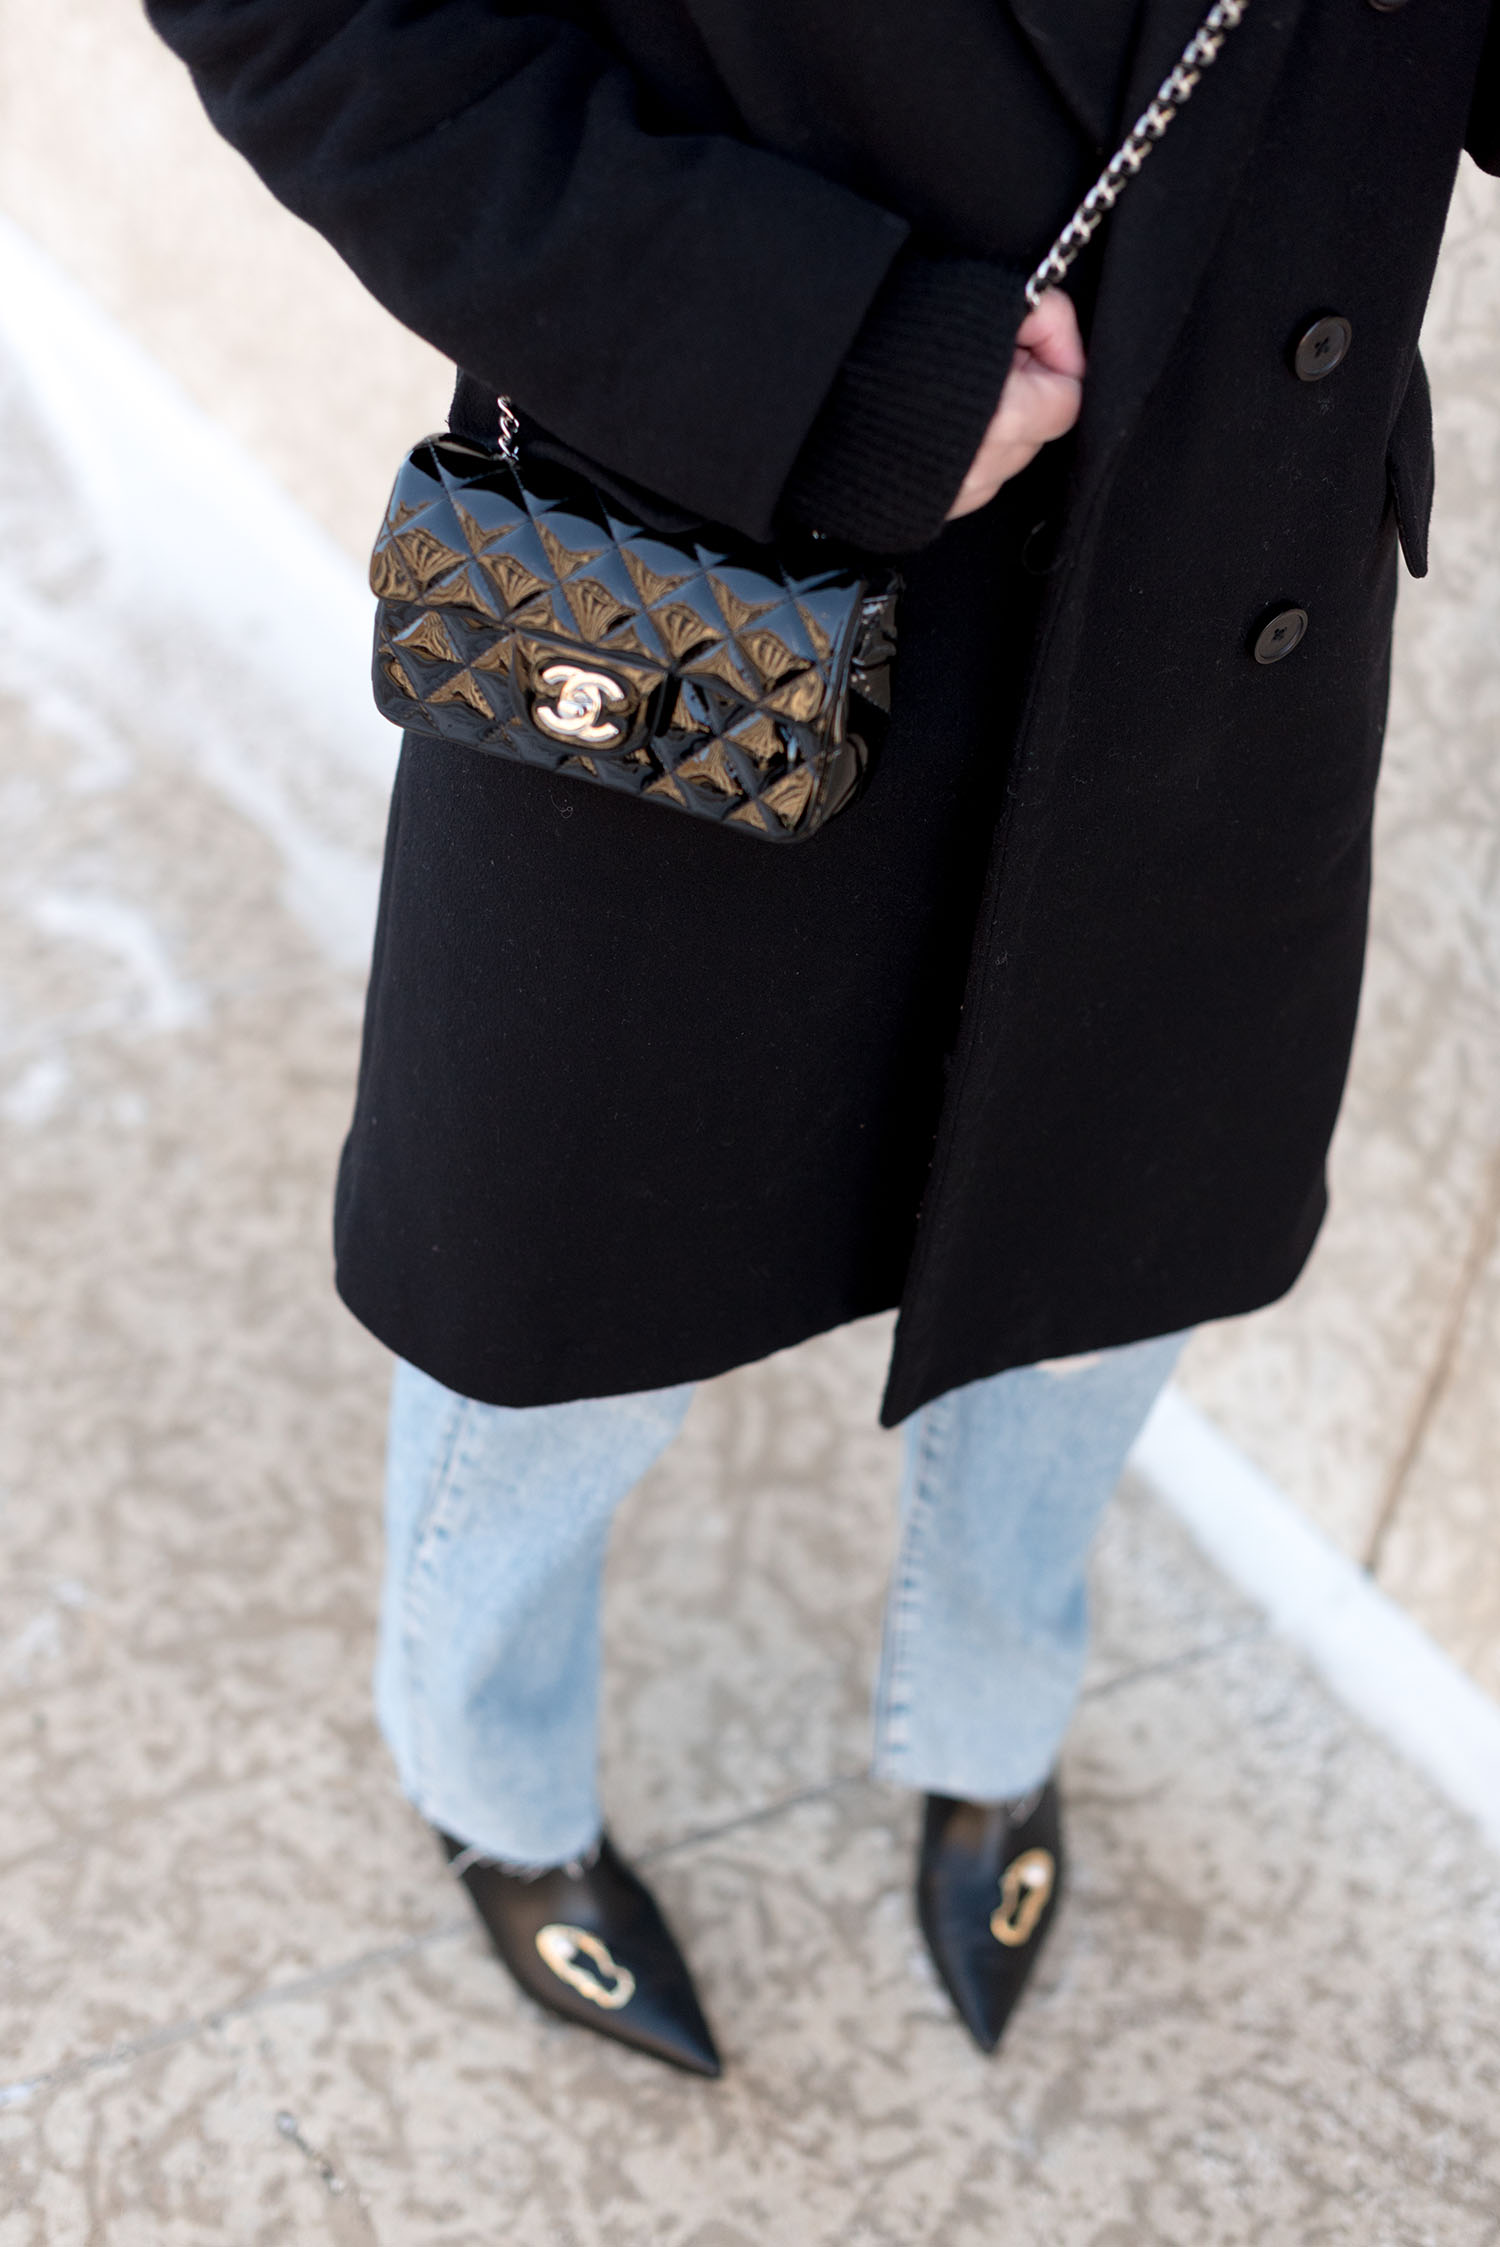 Coco & Vera - Flattered boots, Mavi Barcelona jeans, Chanel extra mini patent handbag